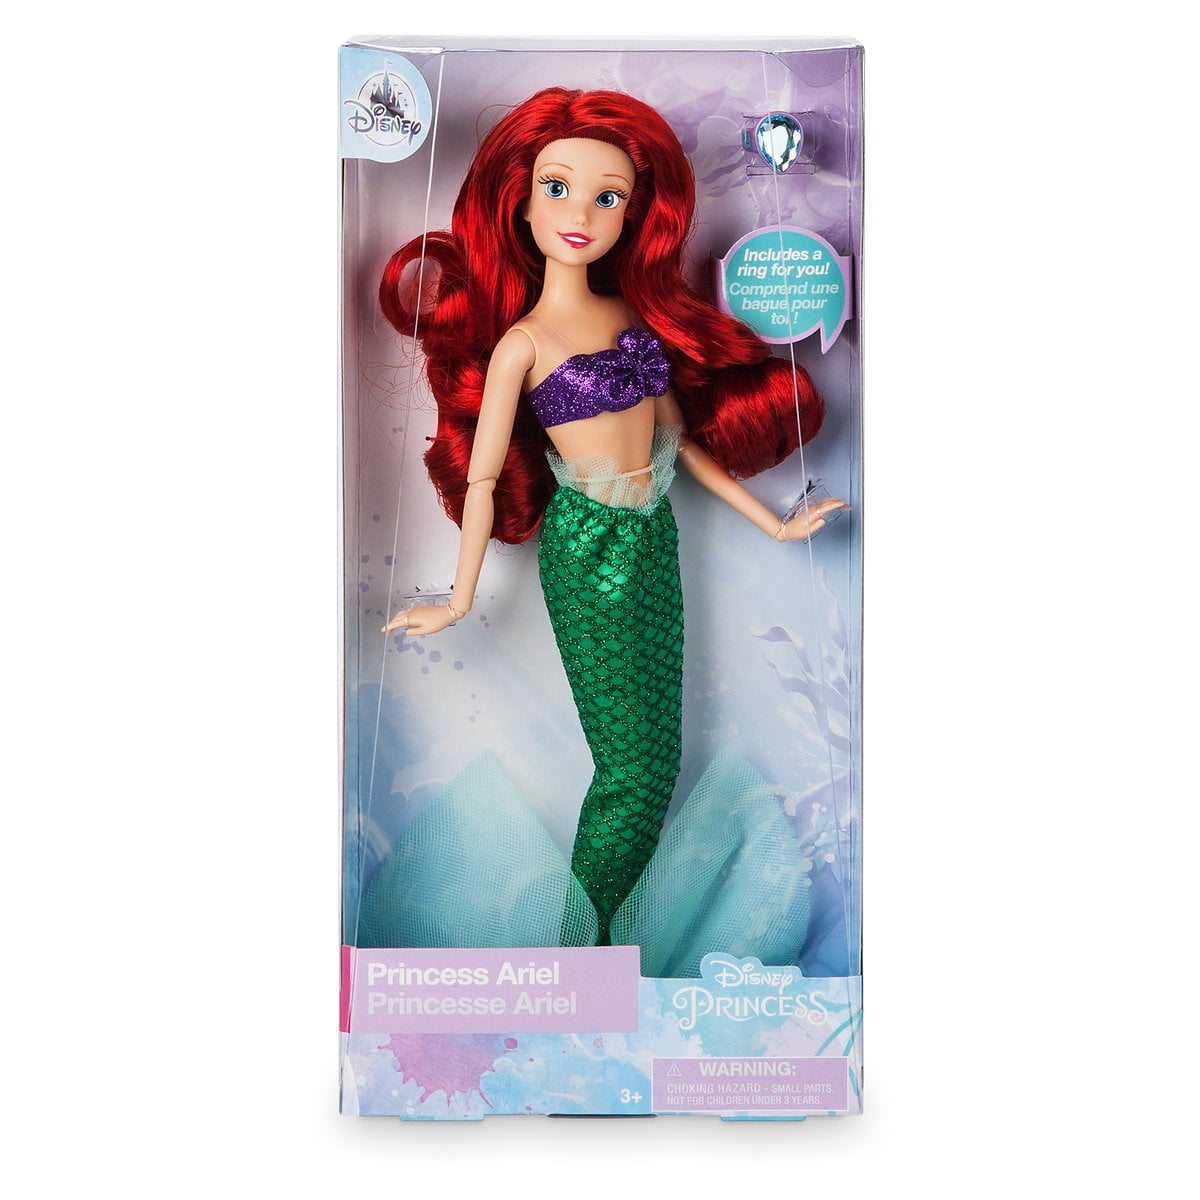 Disney Princess Ariel Classic Doll with 